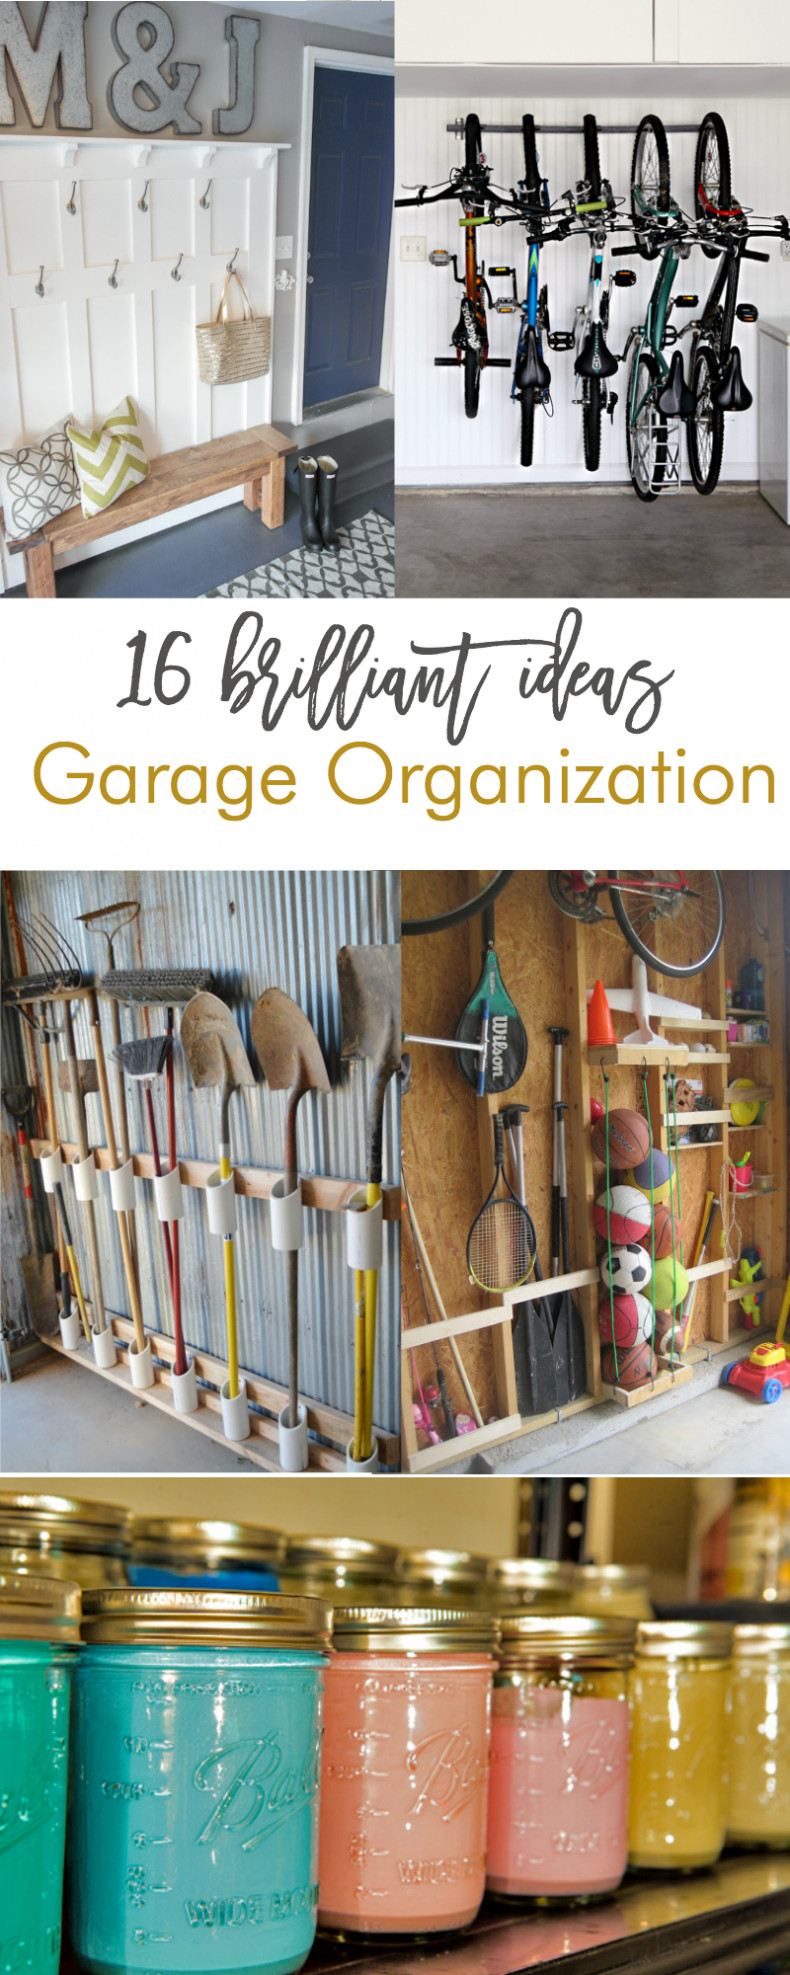 Organize Garage Ideas
 16 Brilliant DIY Garage Organization Ideas